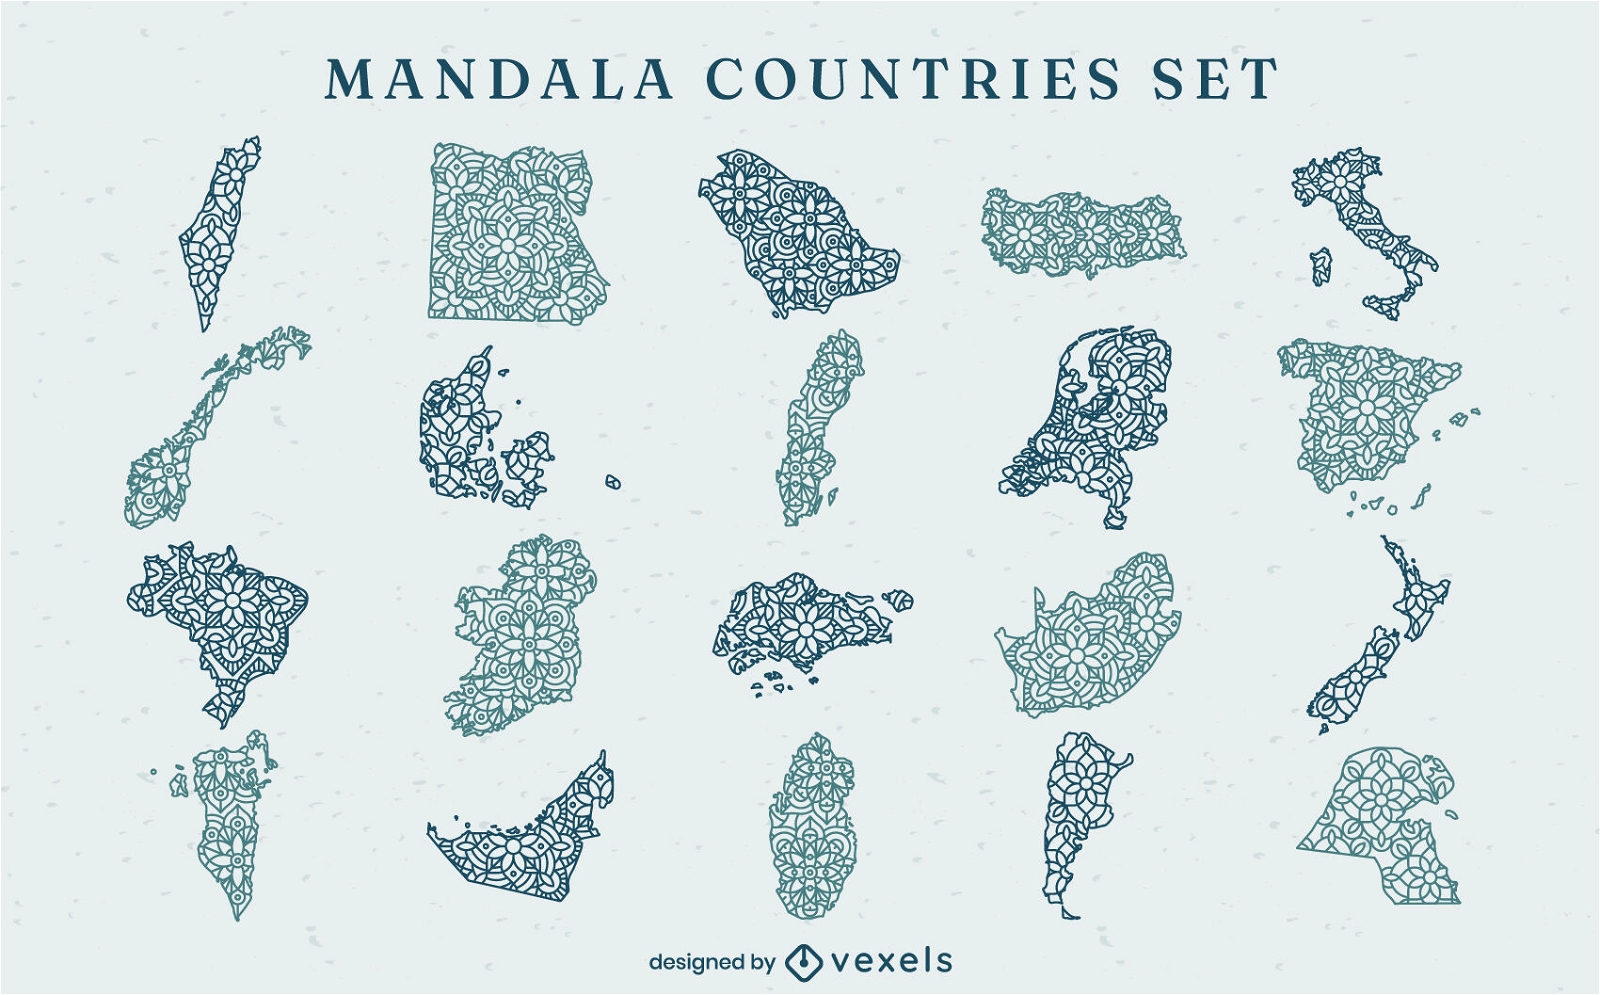 World countries map shapes mandala set